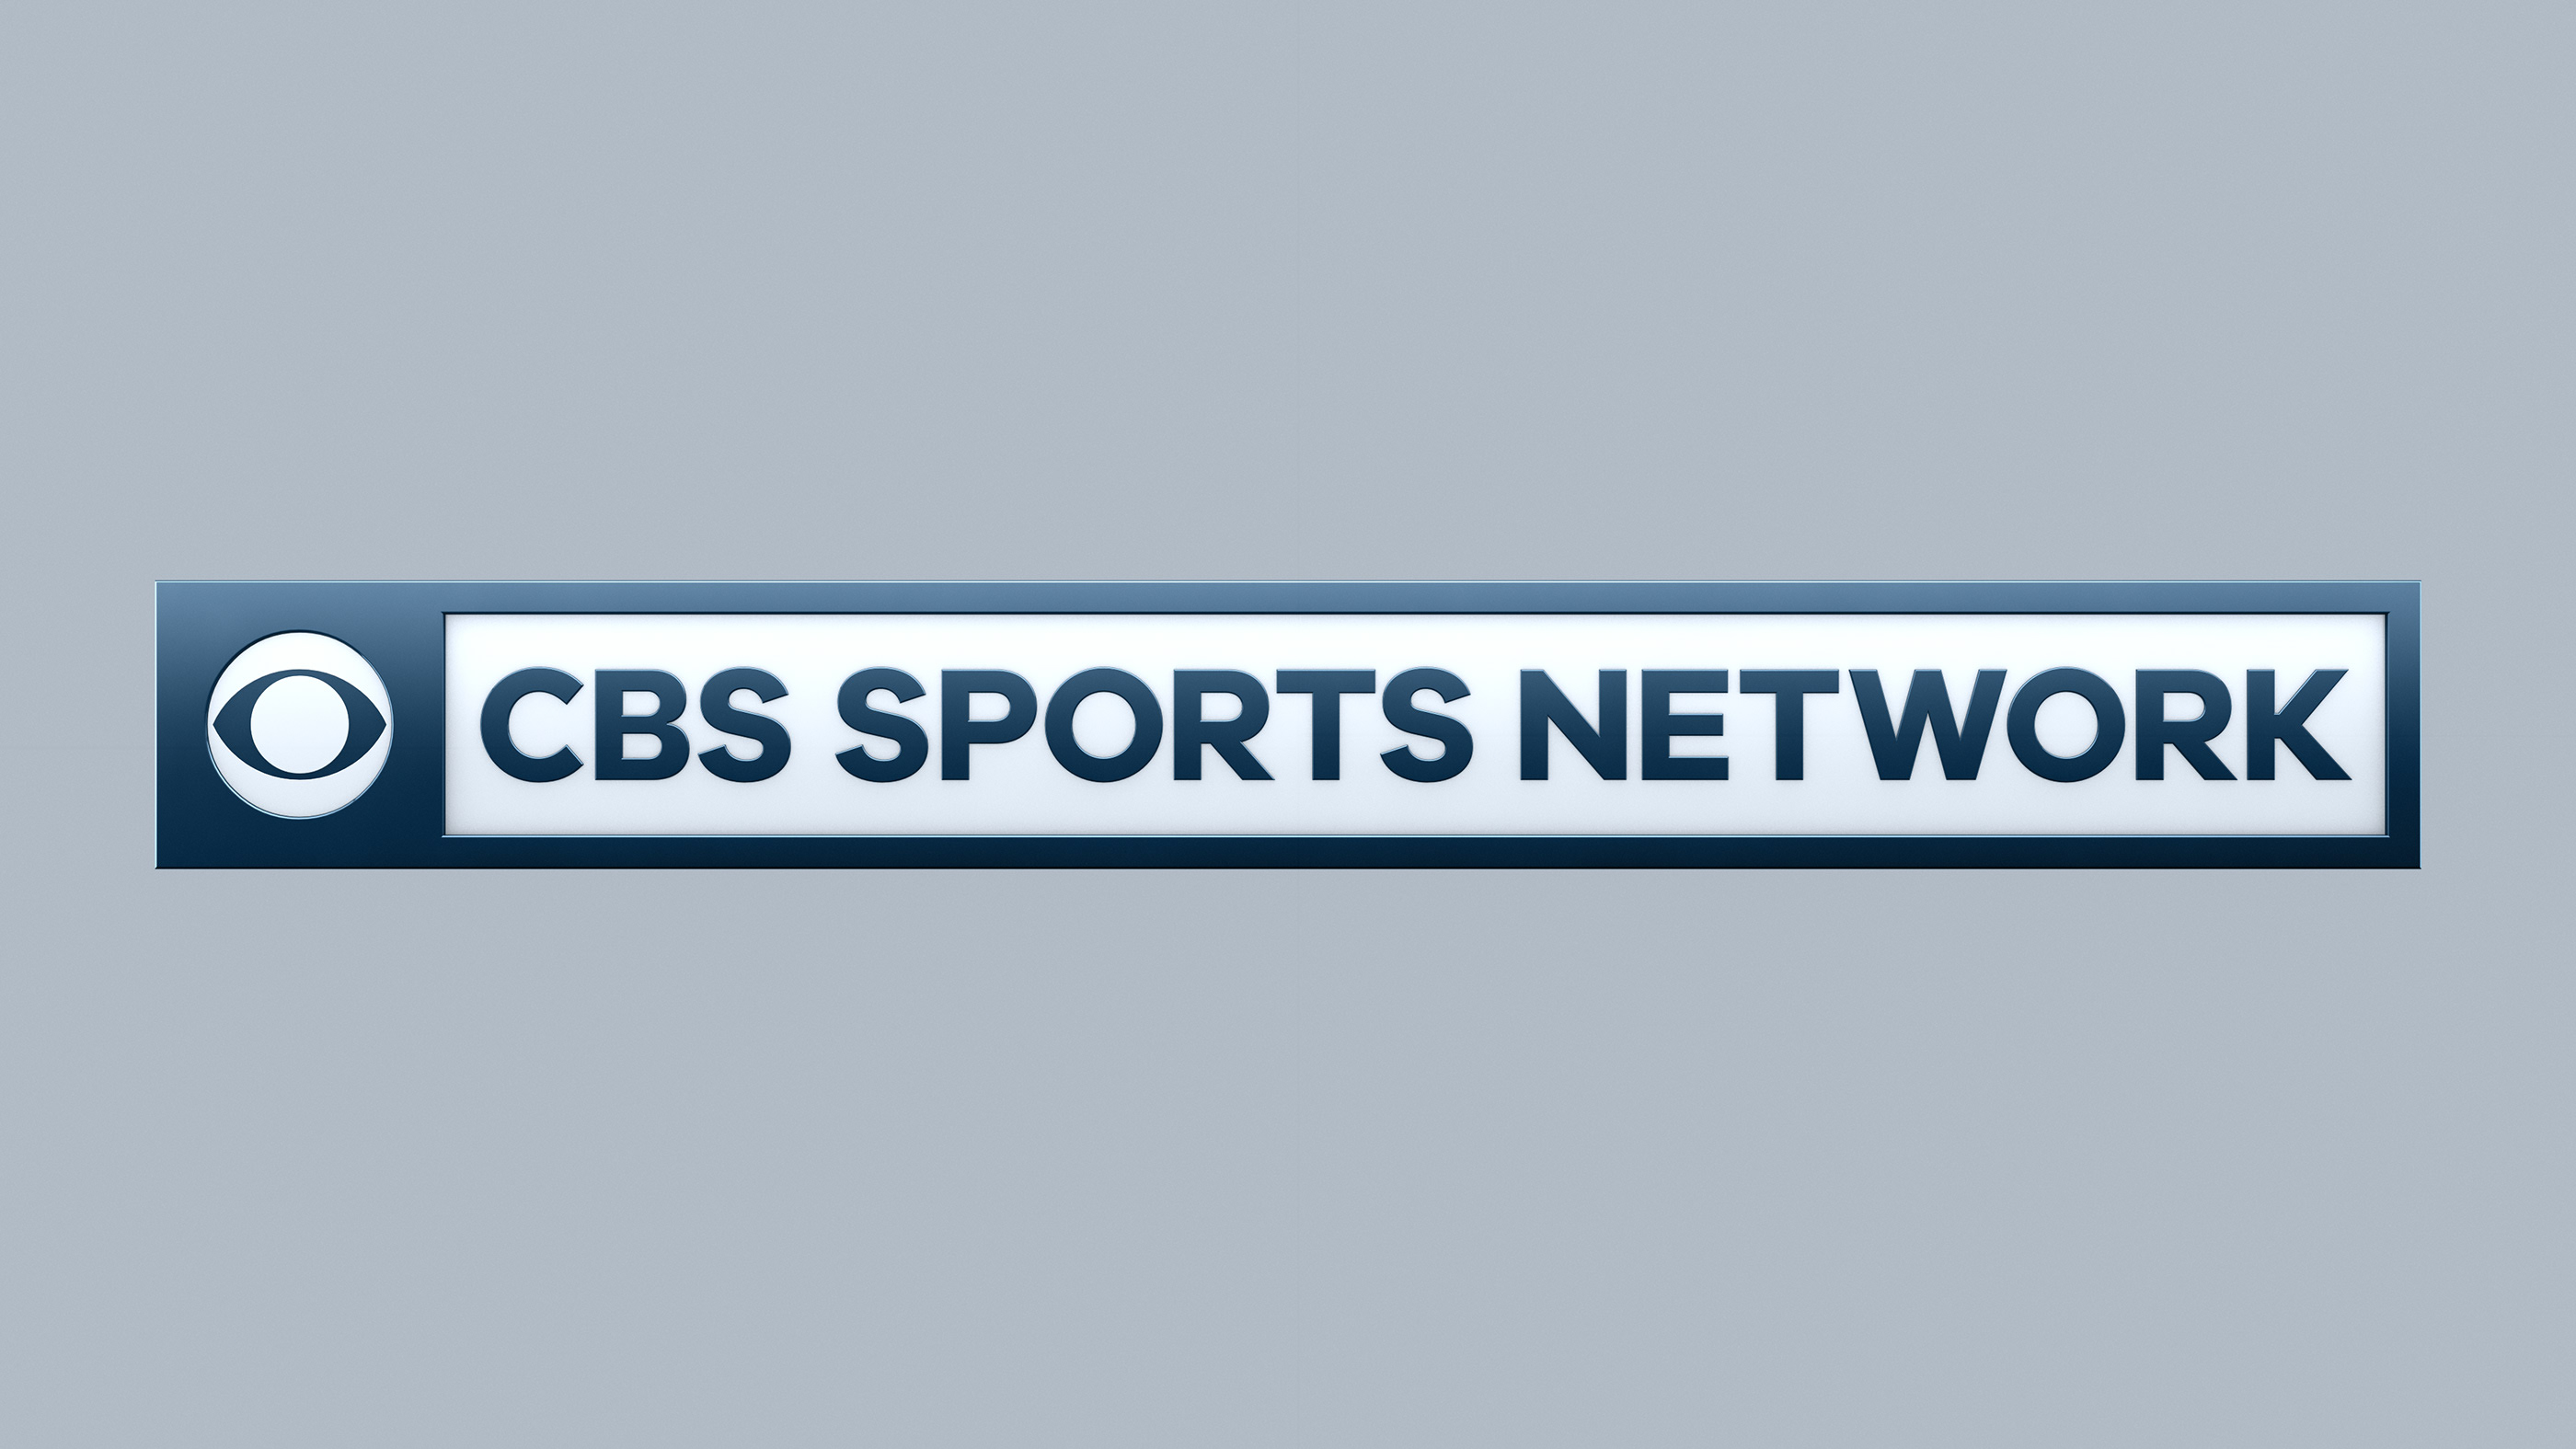 Cbs sport canli. CBC Sport logo. CBC Sport Canli. CBS logo animation. Nick on CBS logo.